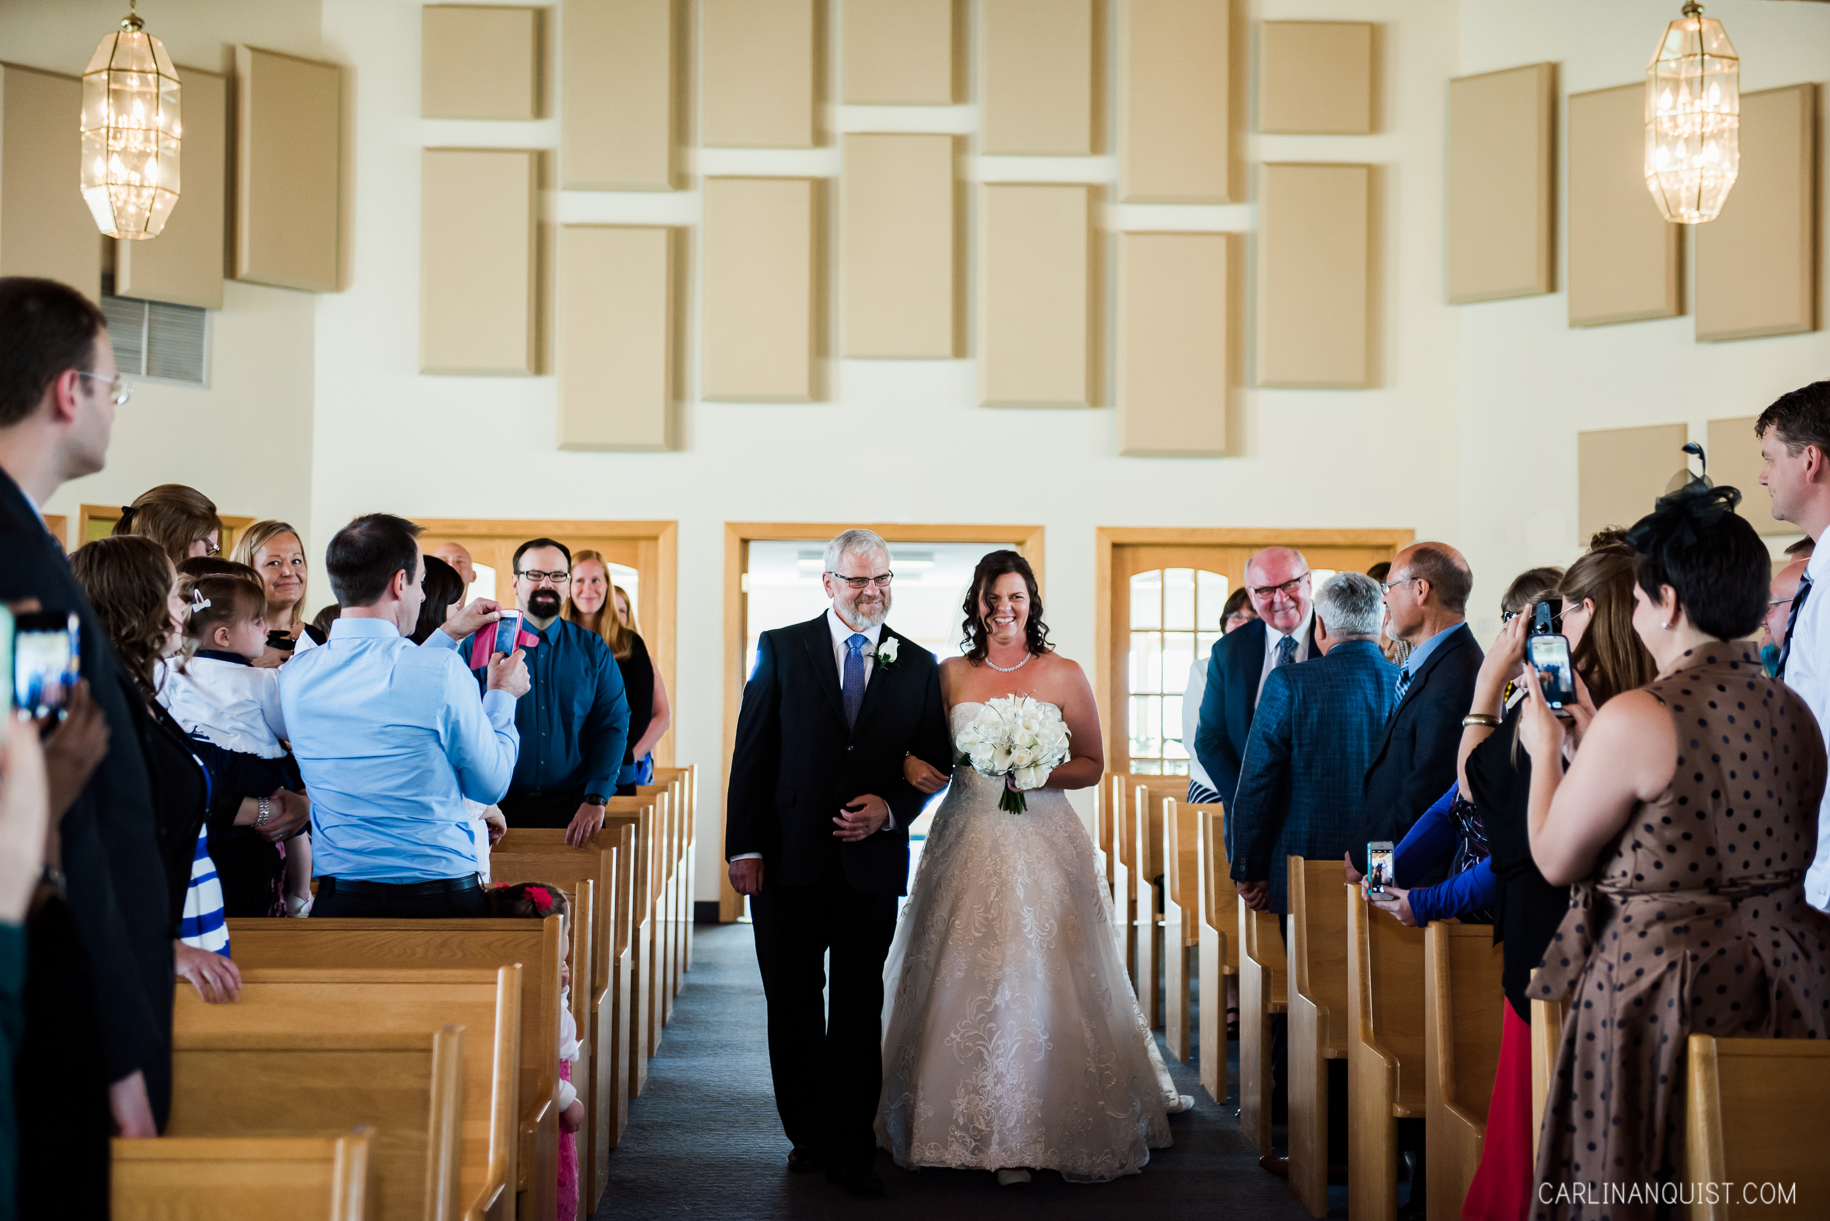 Church Ceremony | Heritage Pointe Golf Club Wedding Photographer